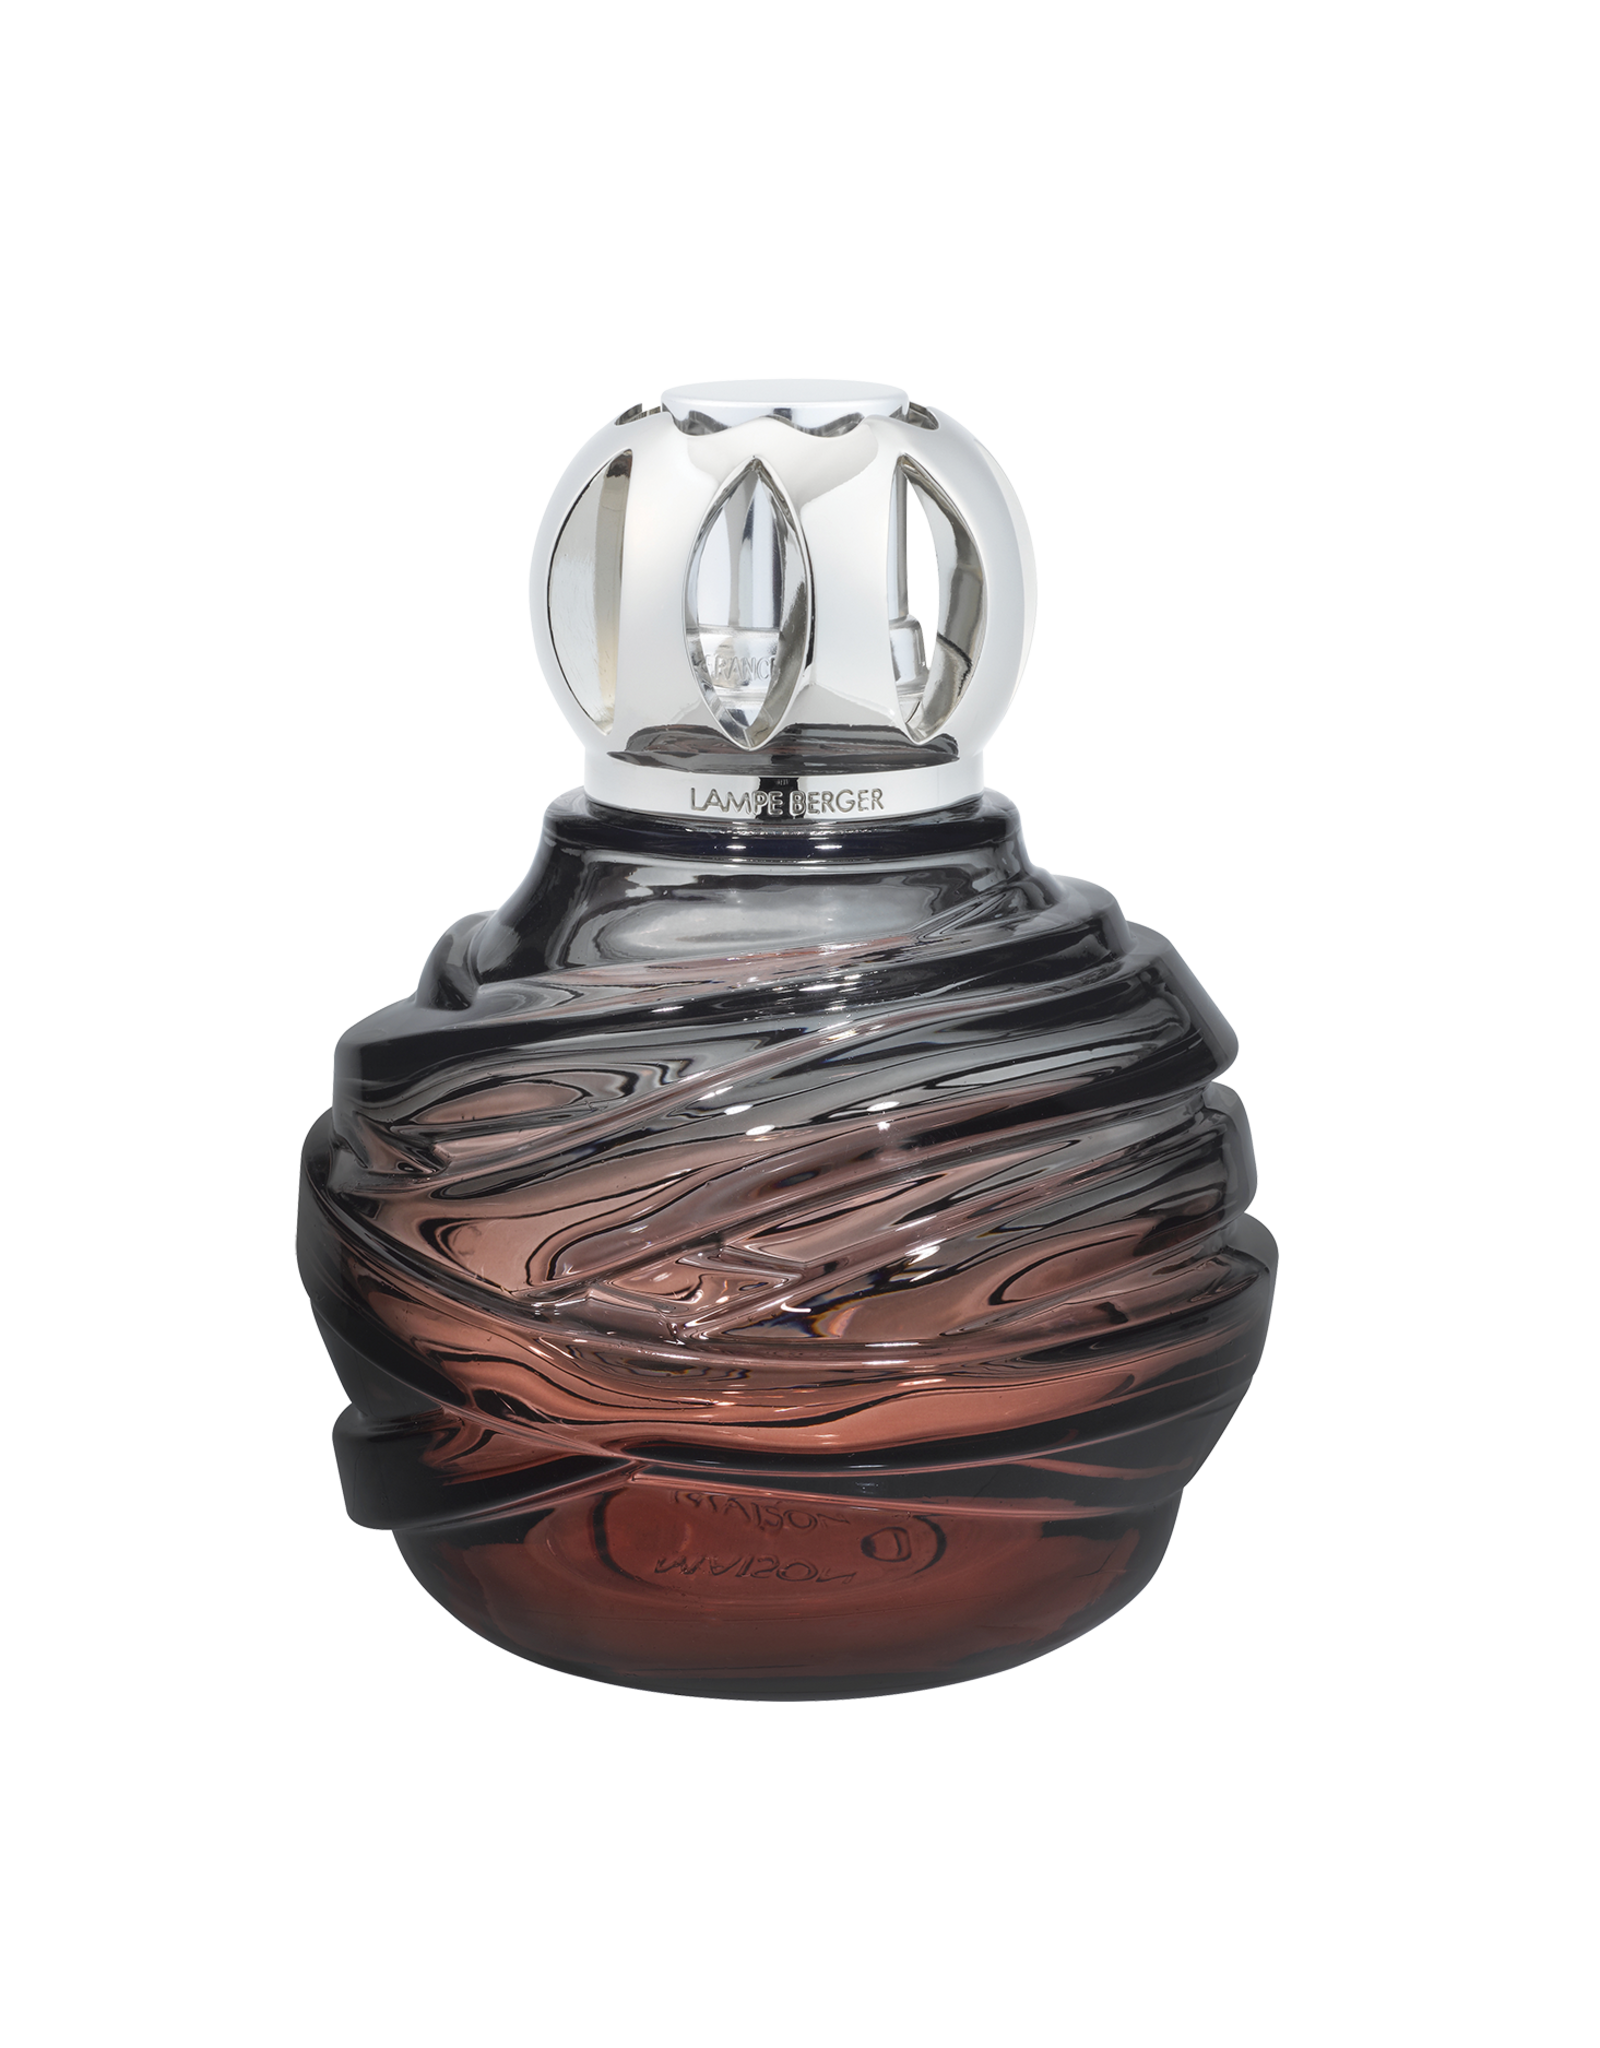 Lampe Dare Grey-Rouge Fragrance Lamp | Berger - N Gifts